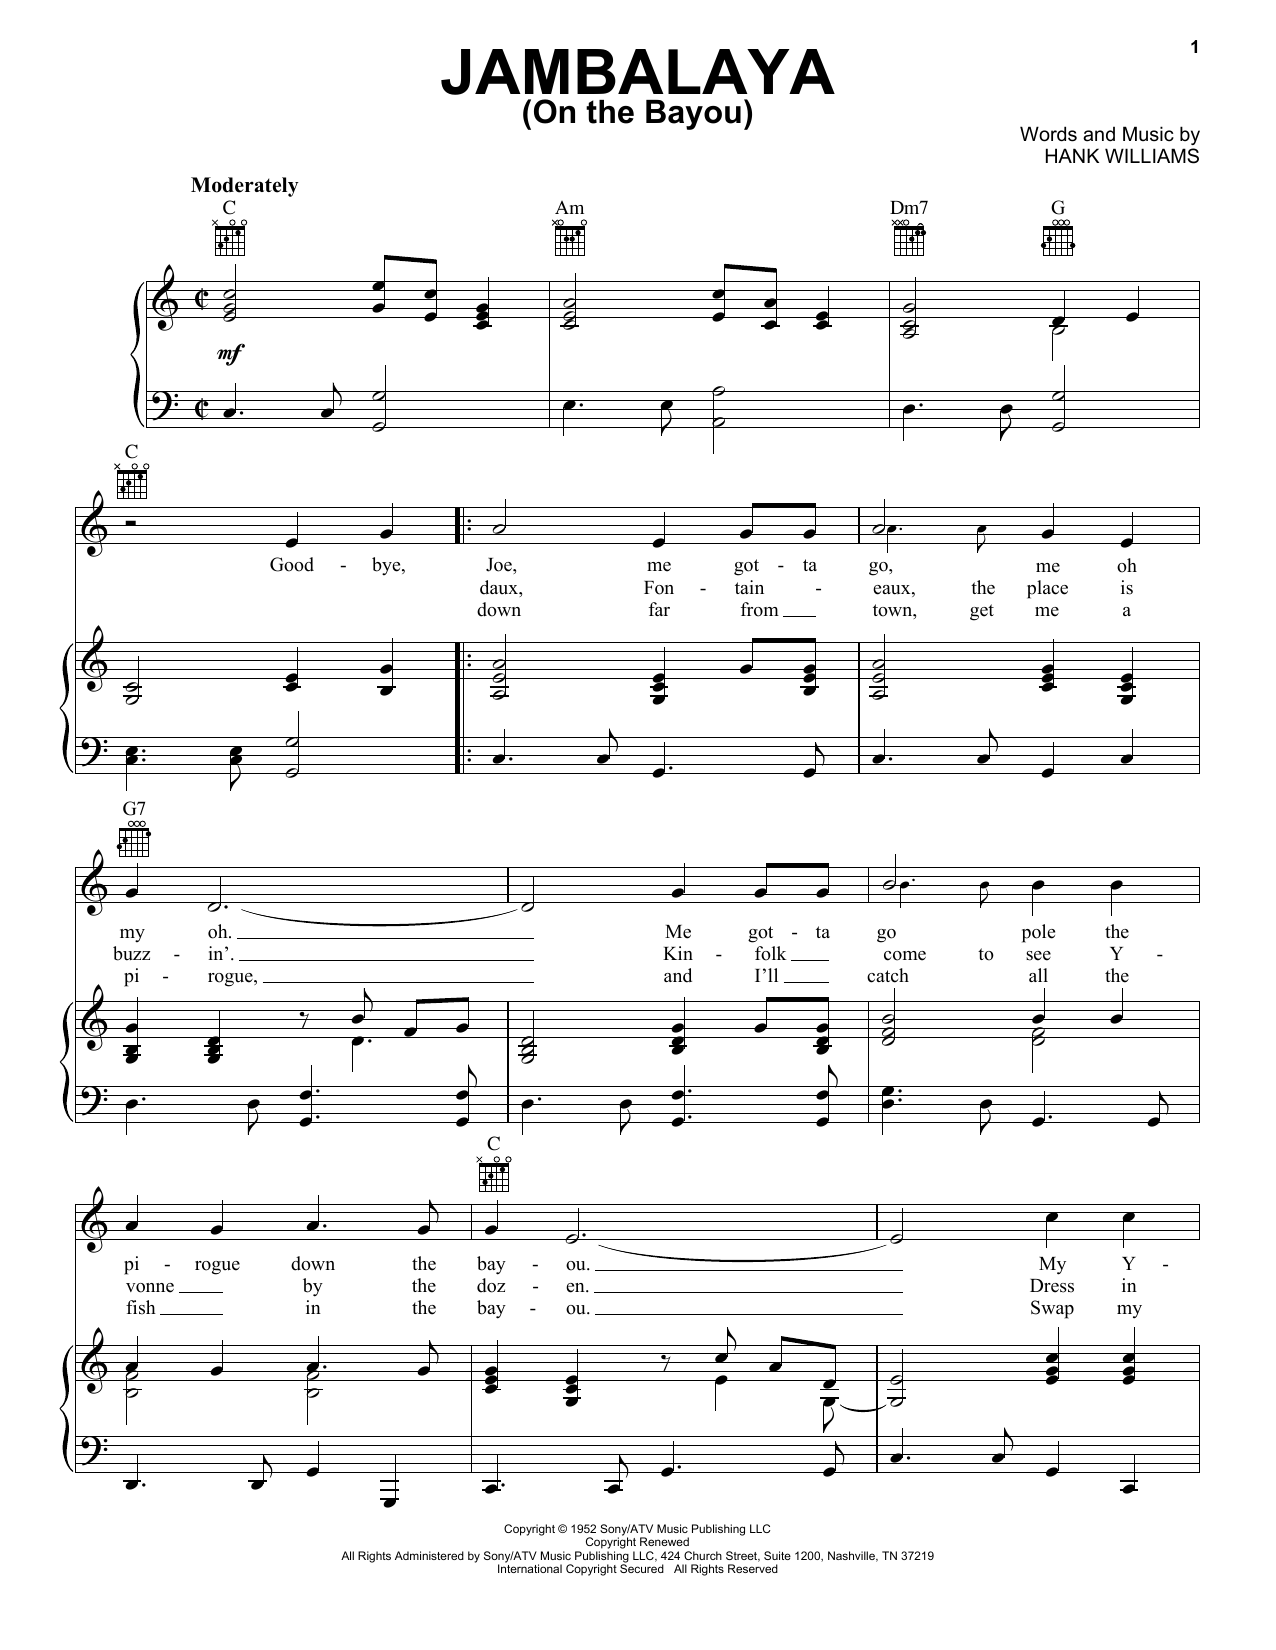 Hank Williams Jambalaya (On The Bayou) Sheet Music Notes & Chords for Harmonica - Download or Print PDF